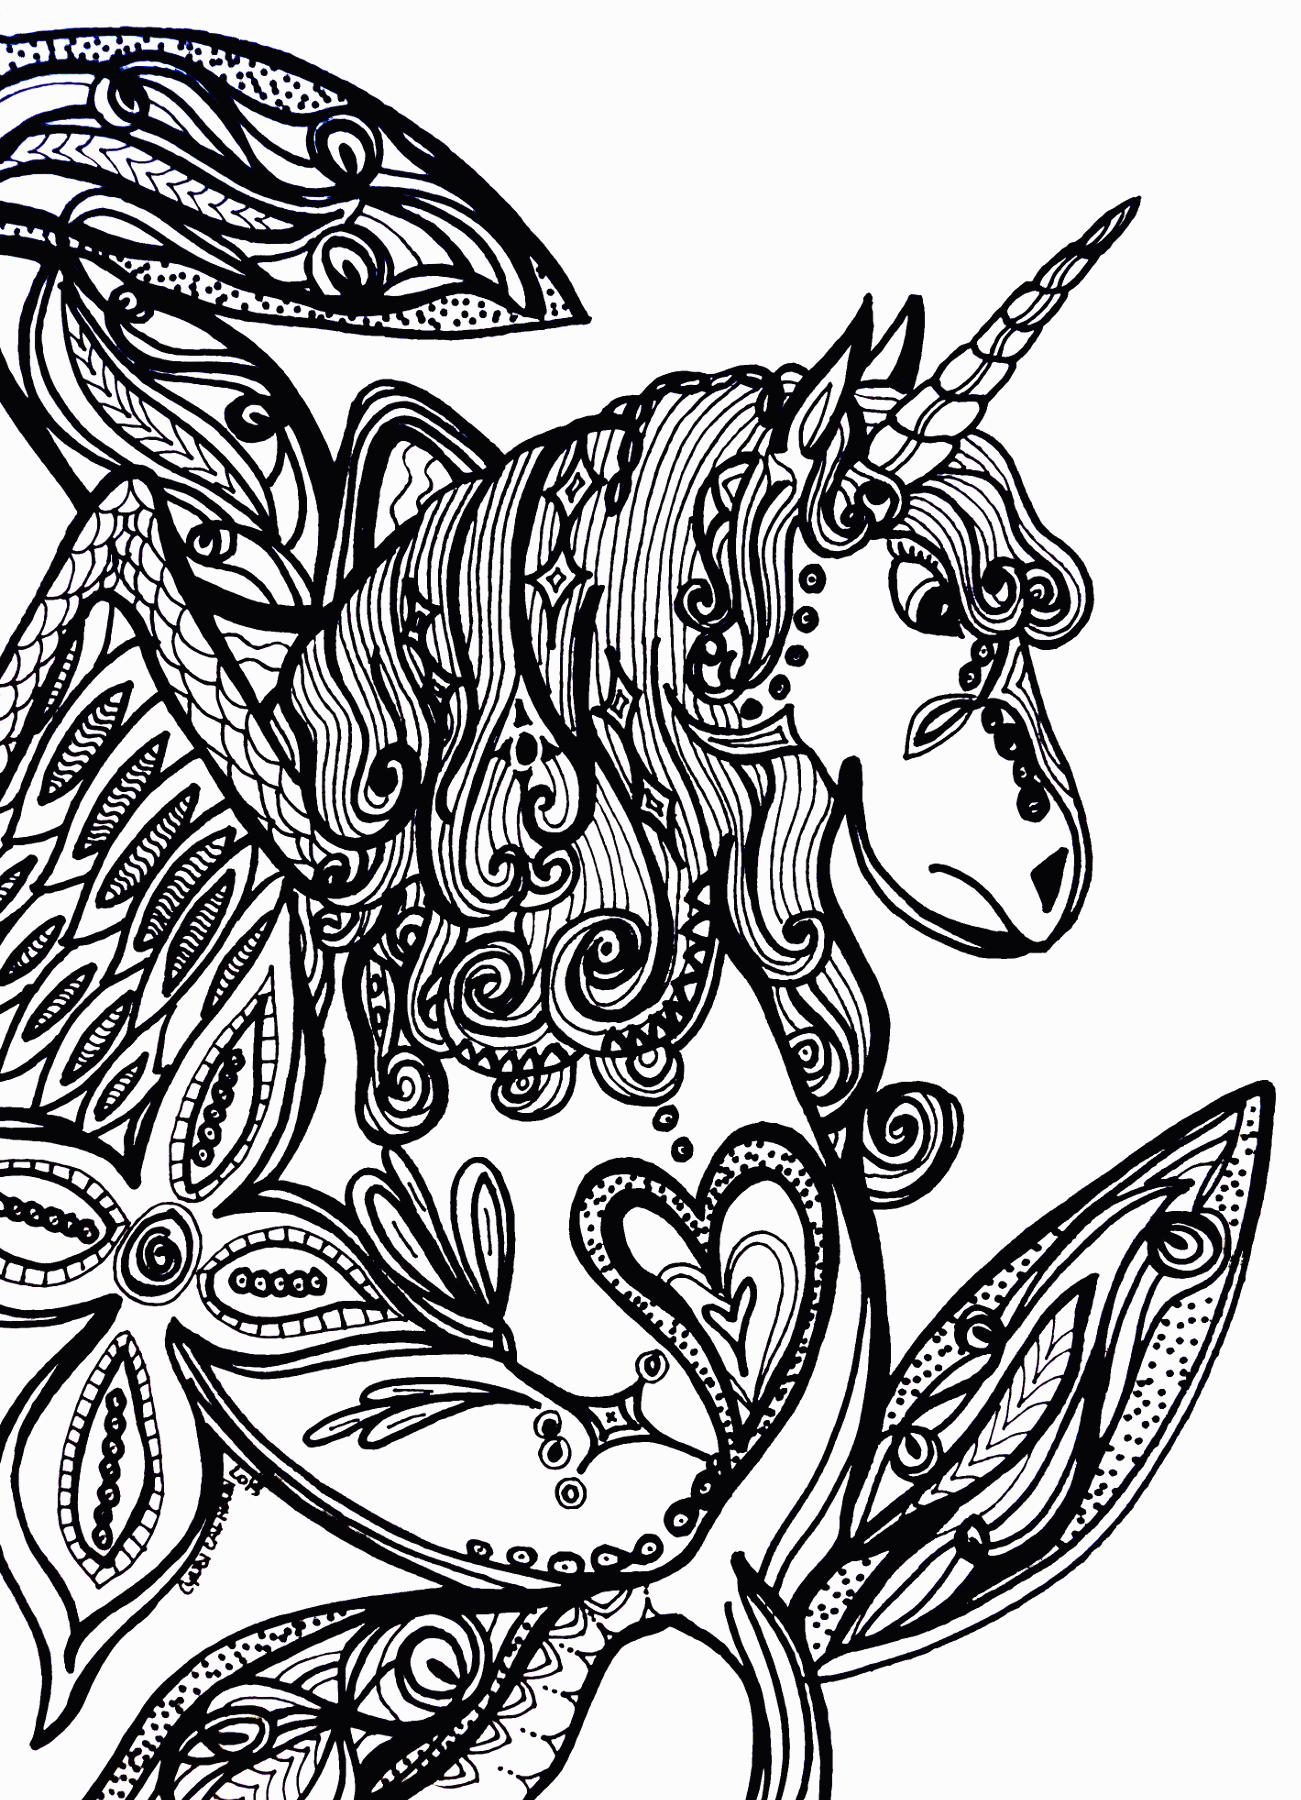 Magic Unicorn Coloring Page – Contemplative Coloring